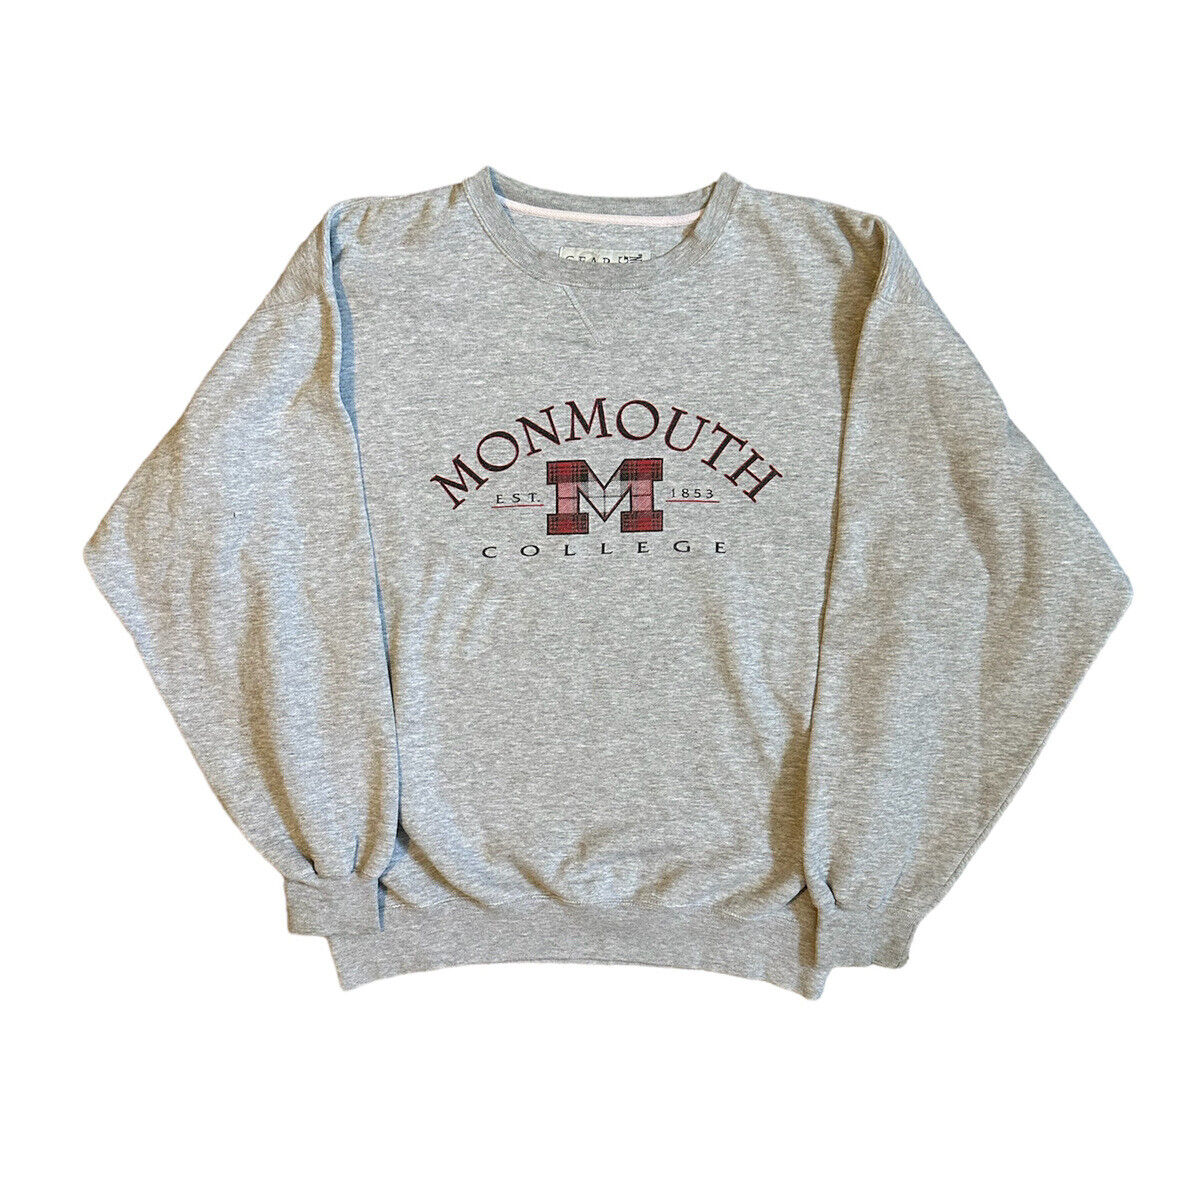 Vintage Monmouth University Crewneck Size Medium